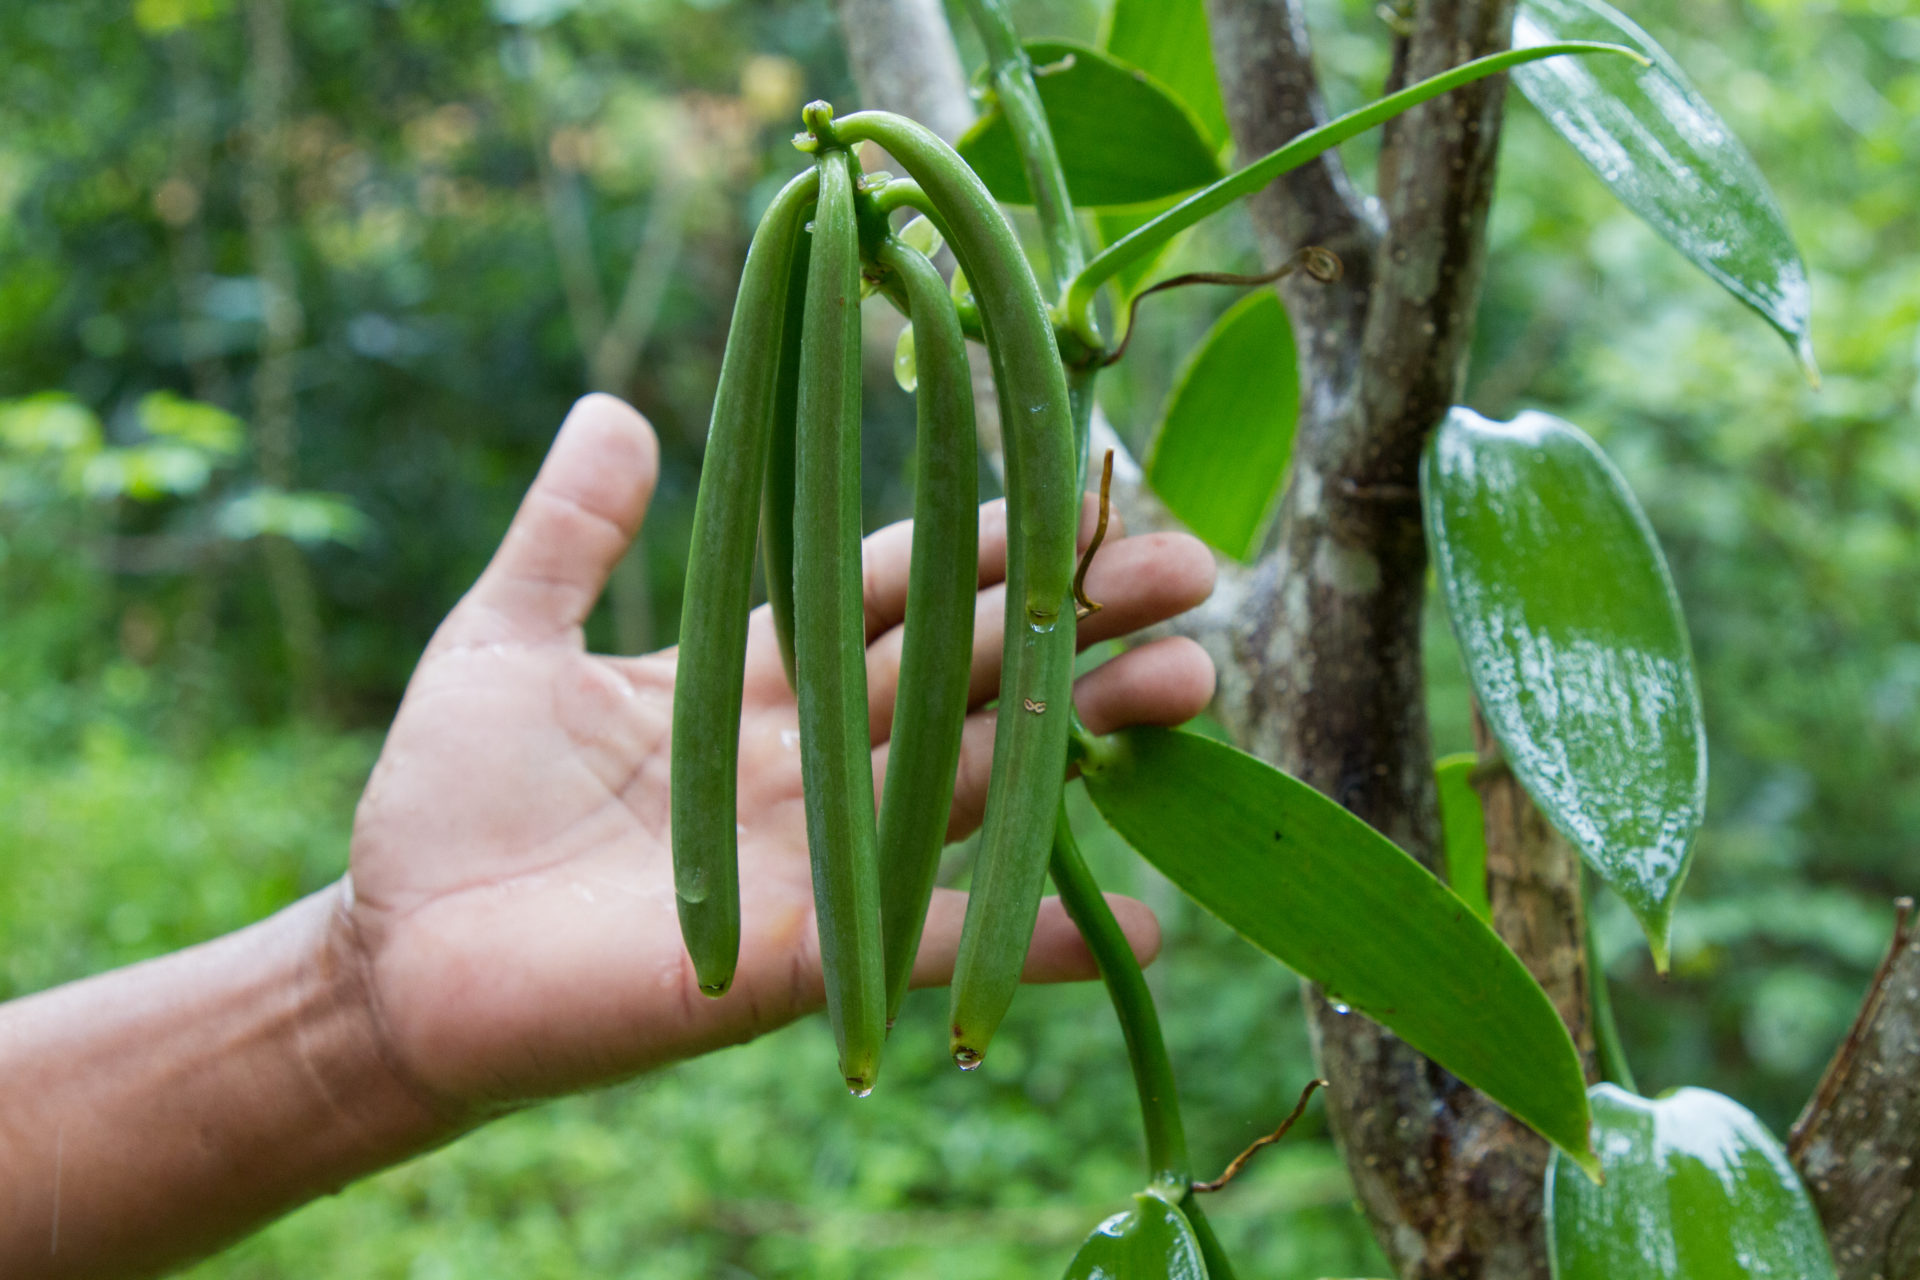 Green vanilla pods hang from a tree.